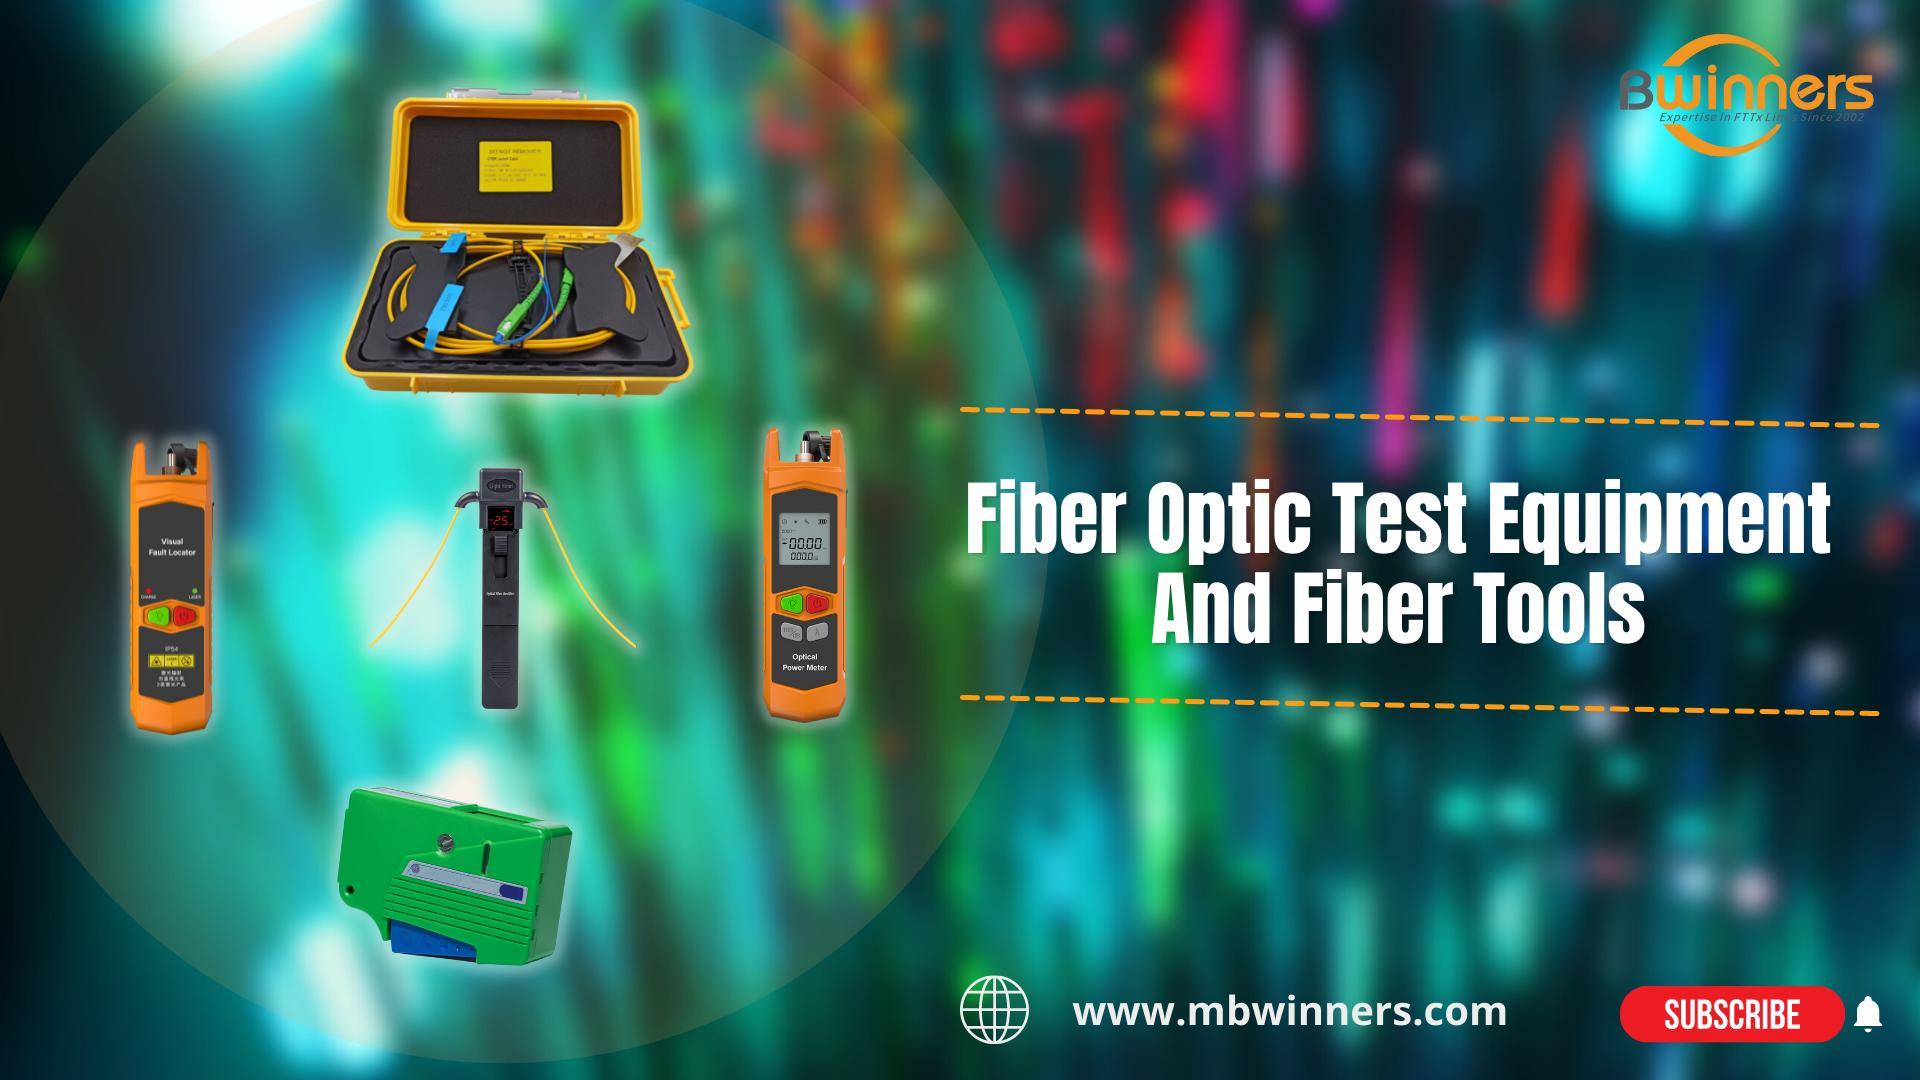 Caja de lanzamiento de fibra BWN-OTDR-LC2 | Identificador de fibra en vivo MBN-OFI-35 | MBN-VFL-30-C VFL FIBRA | MBN-OPM-MINI MINI METER POWER | Limpiador de fibra MBN-OCC | Equipo de prueba de fibra óptica y herramientas de fibra | #Fthth #fttx | Bwinner